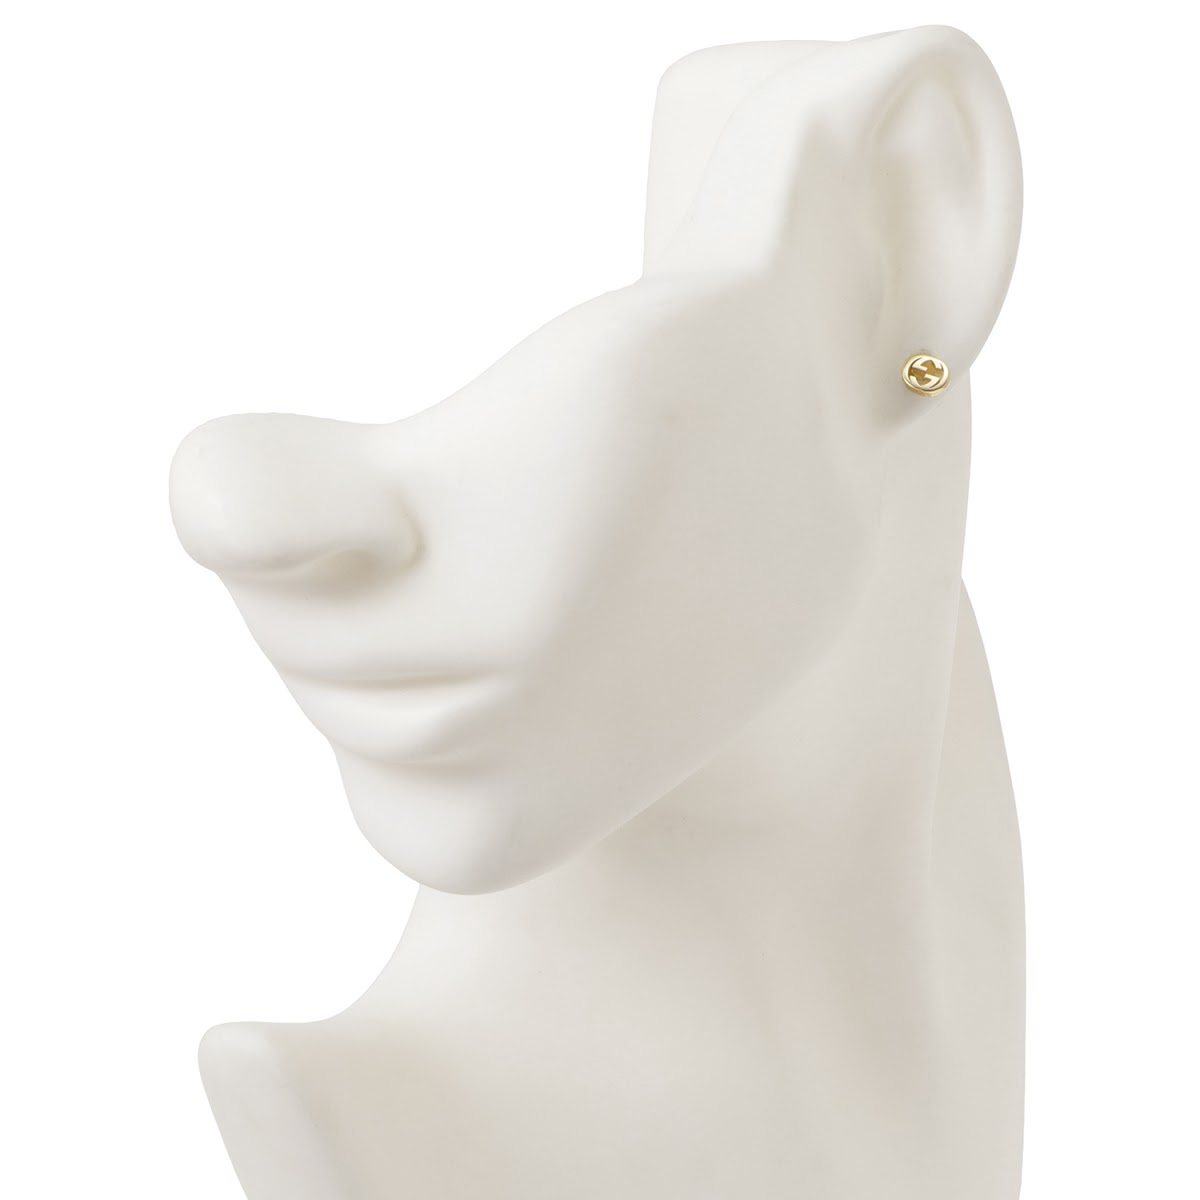  Gucci GUCCI 662111-J8500-8000 Inter  locking G stud  earrings 18KYG yellow  gold  lady's  accessory  men's  unisex INTERLOCKING G